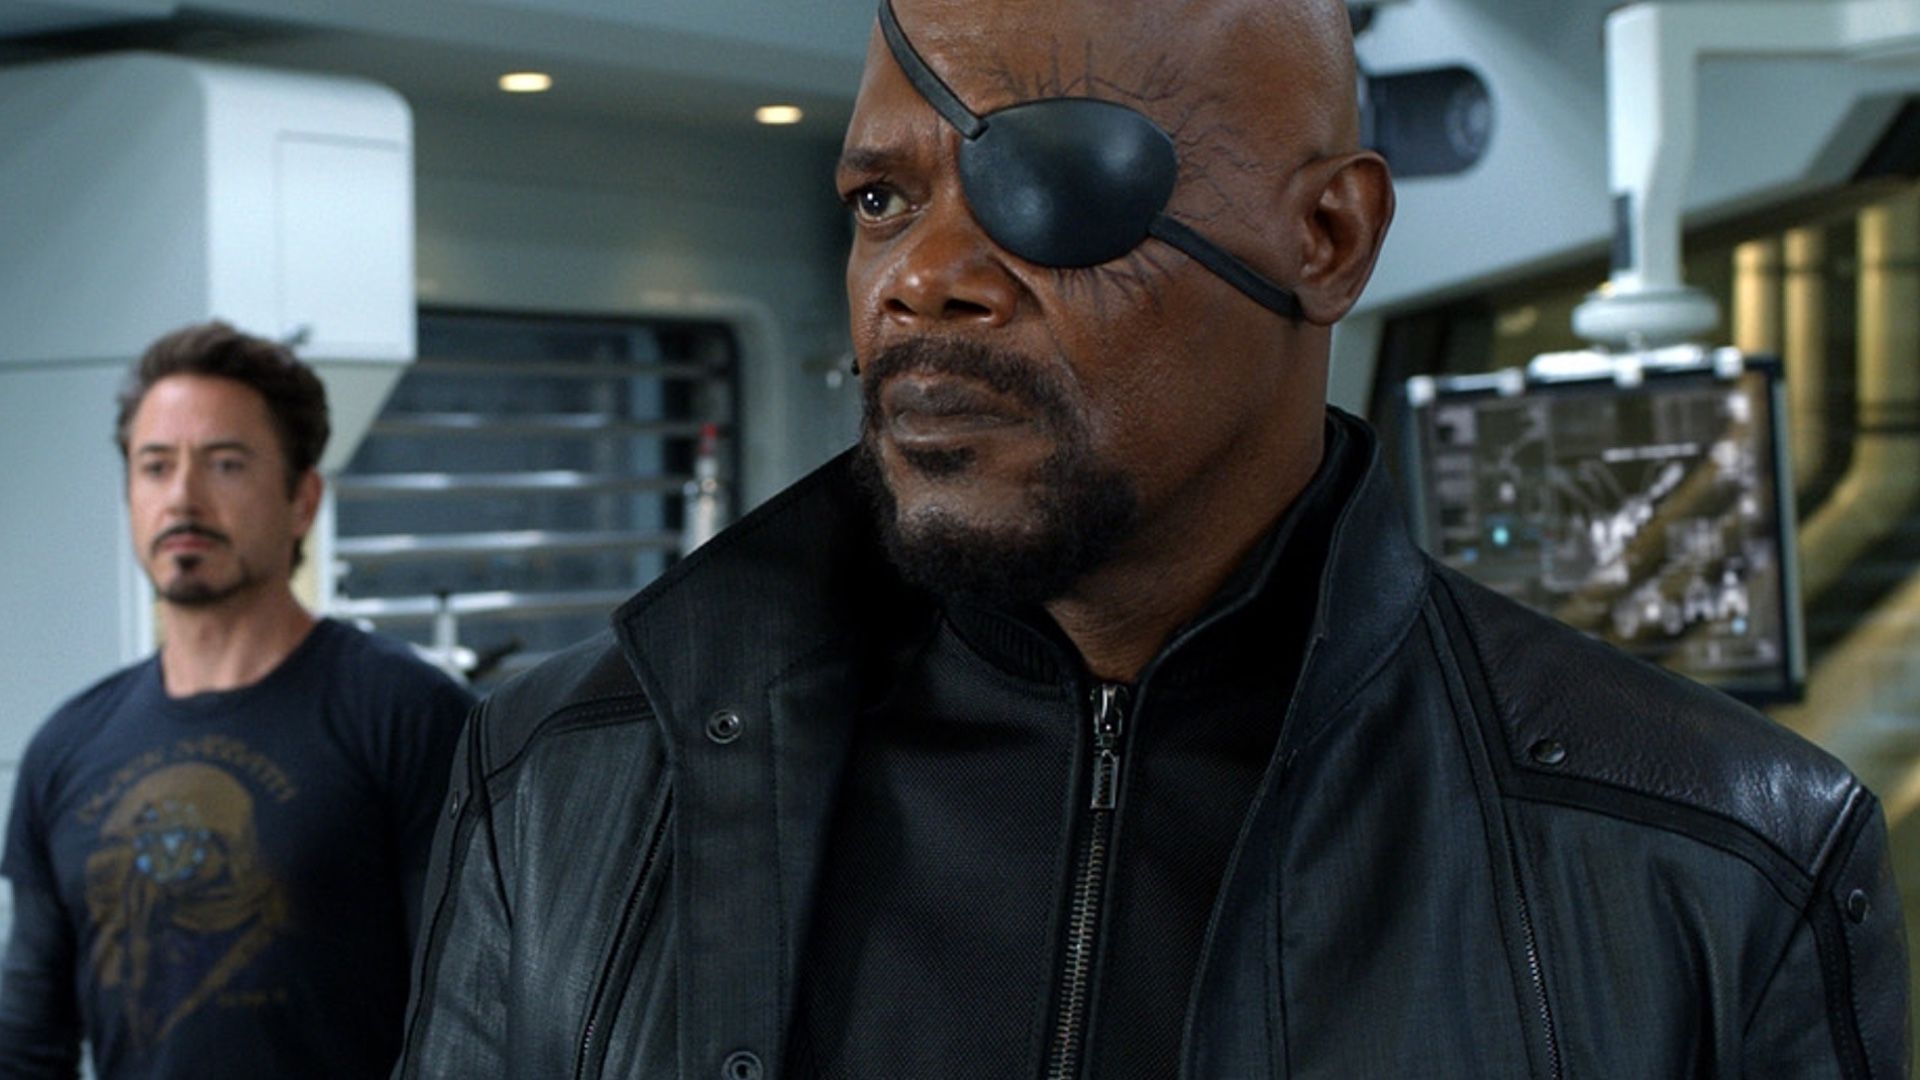 Actor Samuel L. Jackson as Nick Fury in the MCU